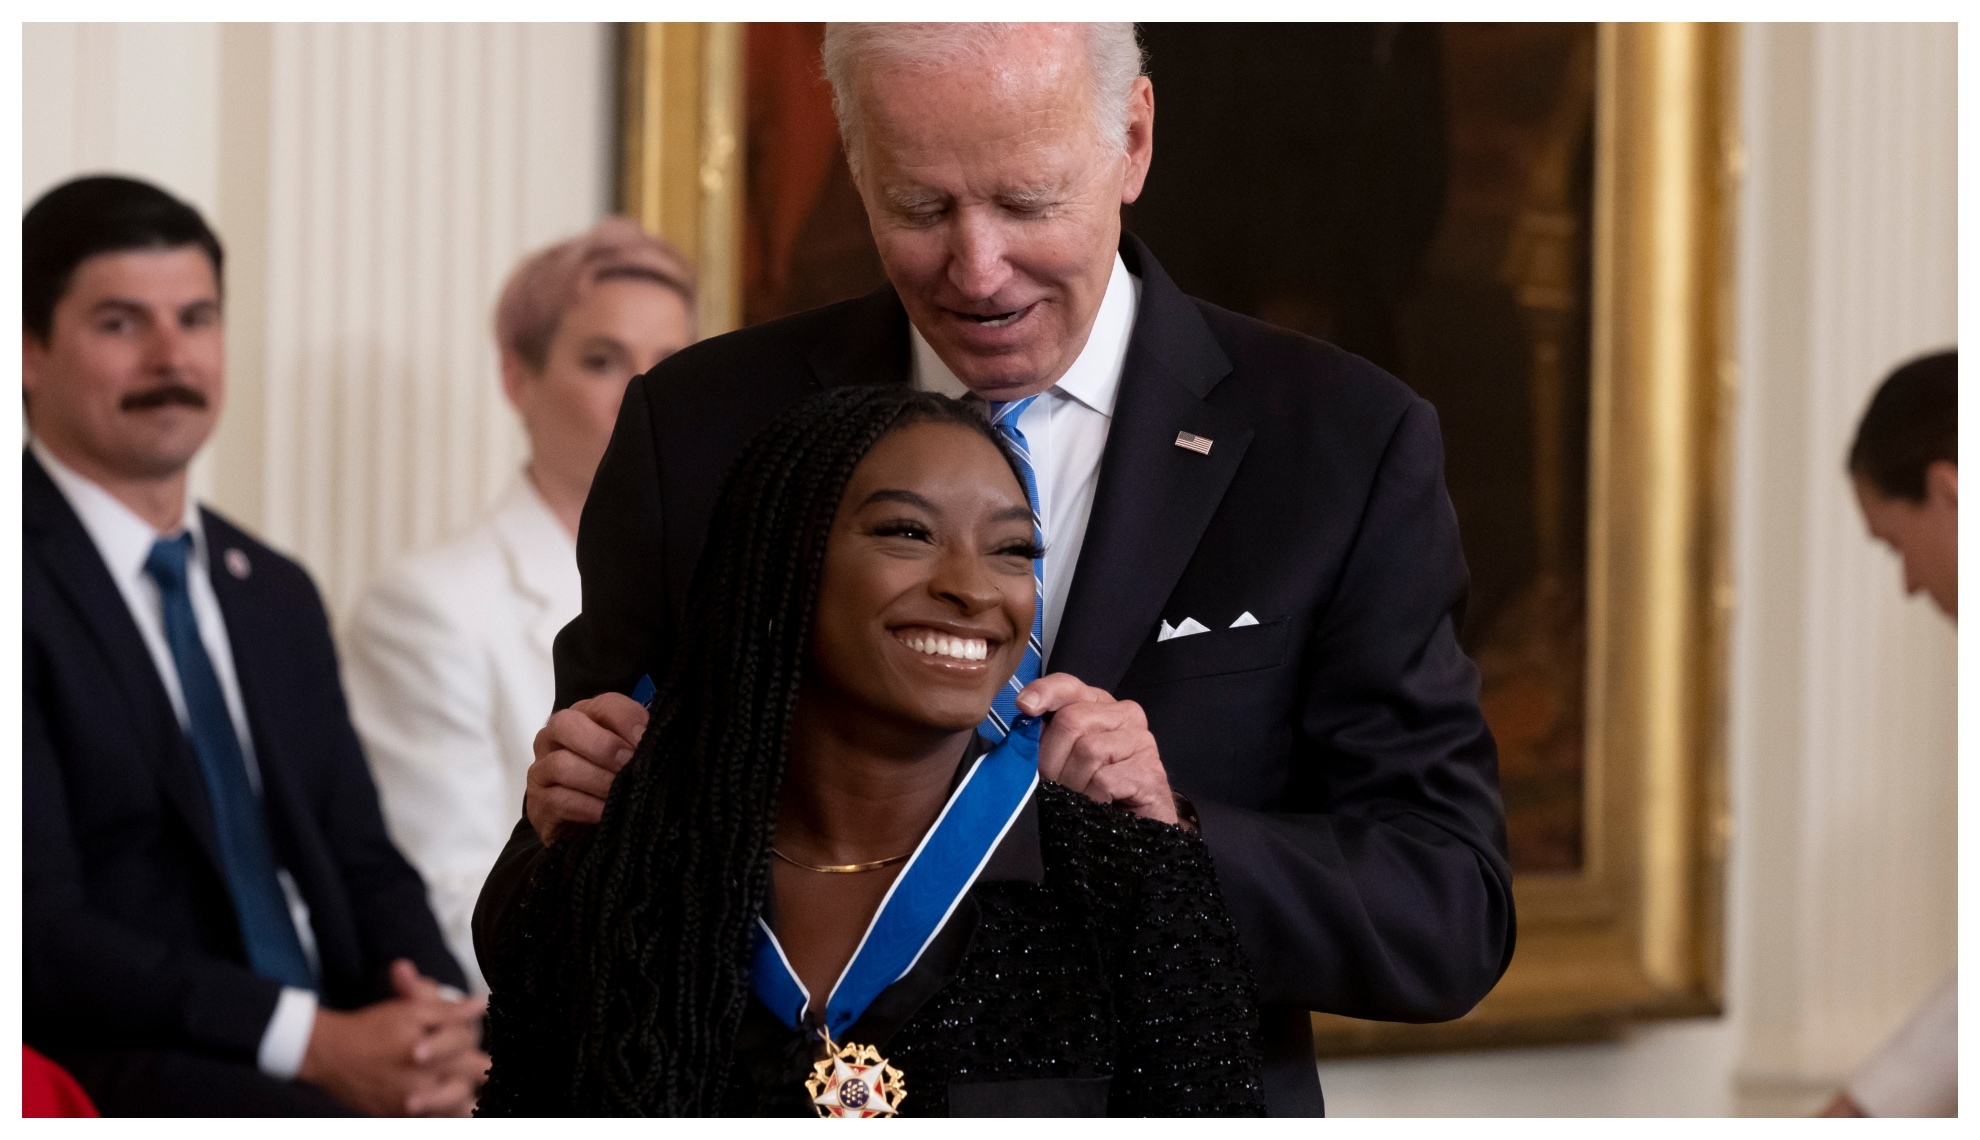 Biles receives her medal from Biden.